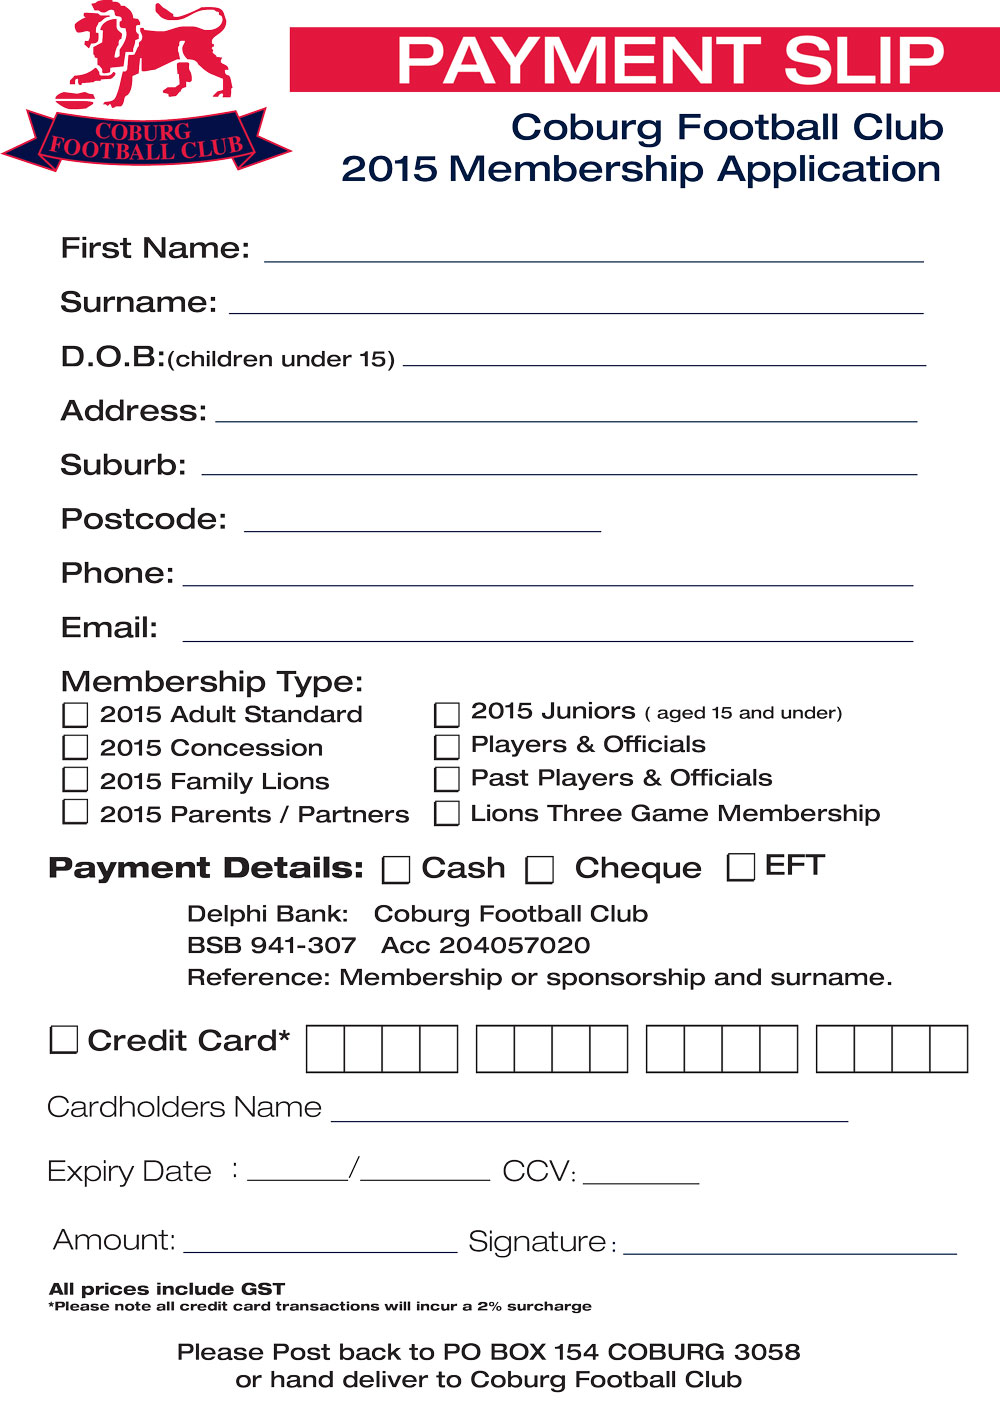 Coburg-Lions-Membership-Form-2015-4